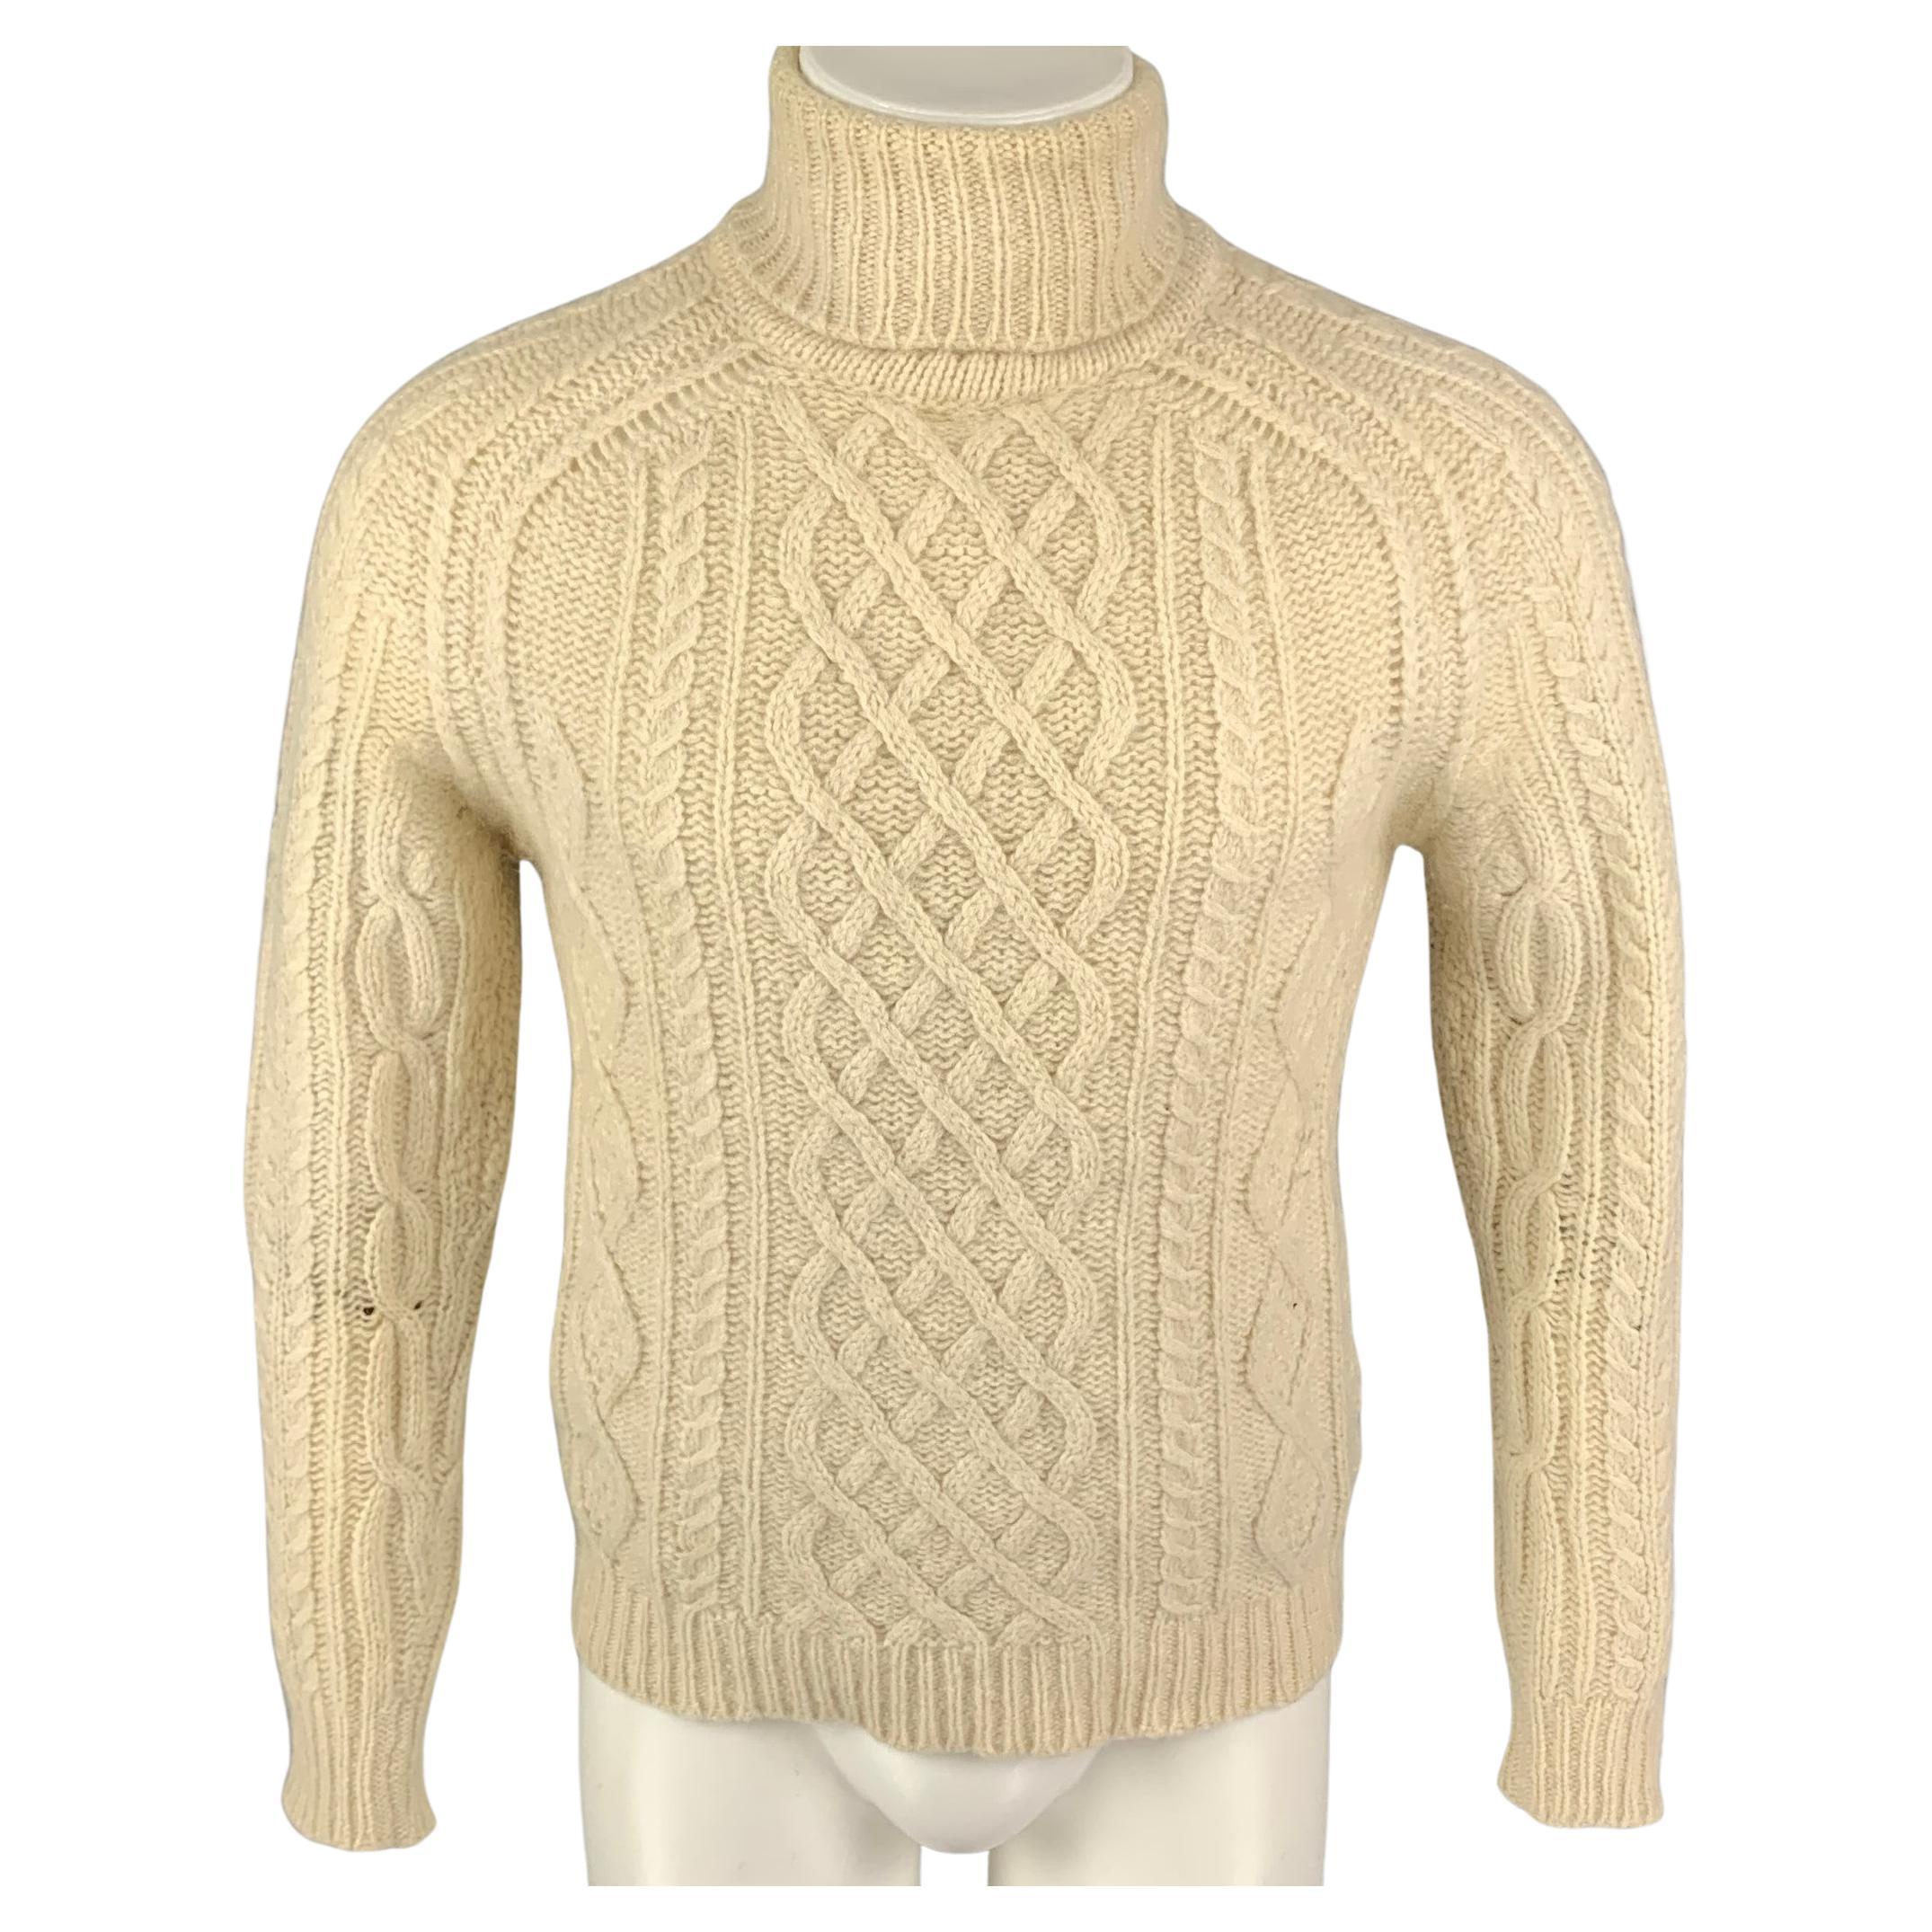 DIOR HOMME Size S Cream Knit Alpaca Blend Turtleneck Sweater